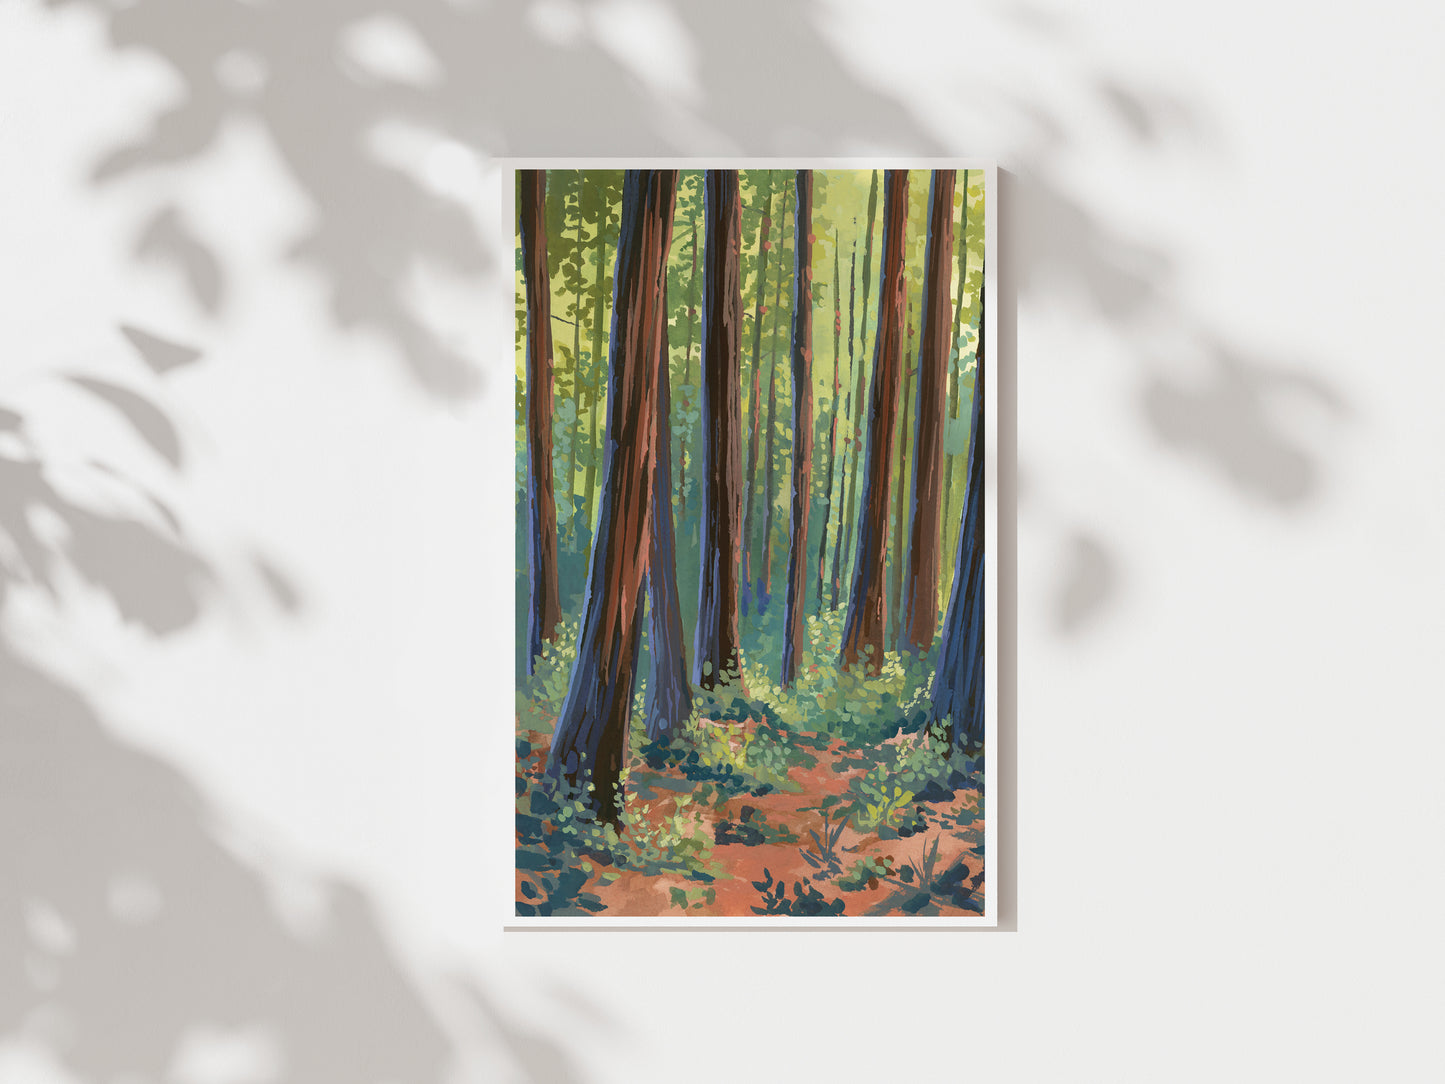 Art print of redwood trees in California’s Muir Woods National Monument.